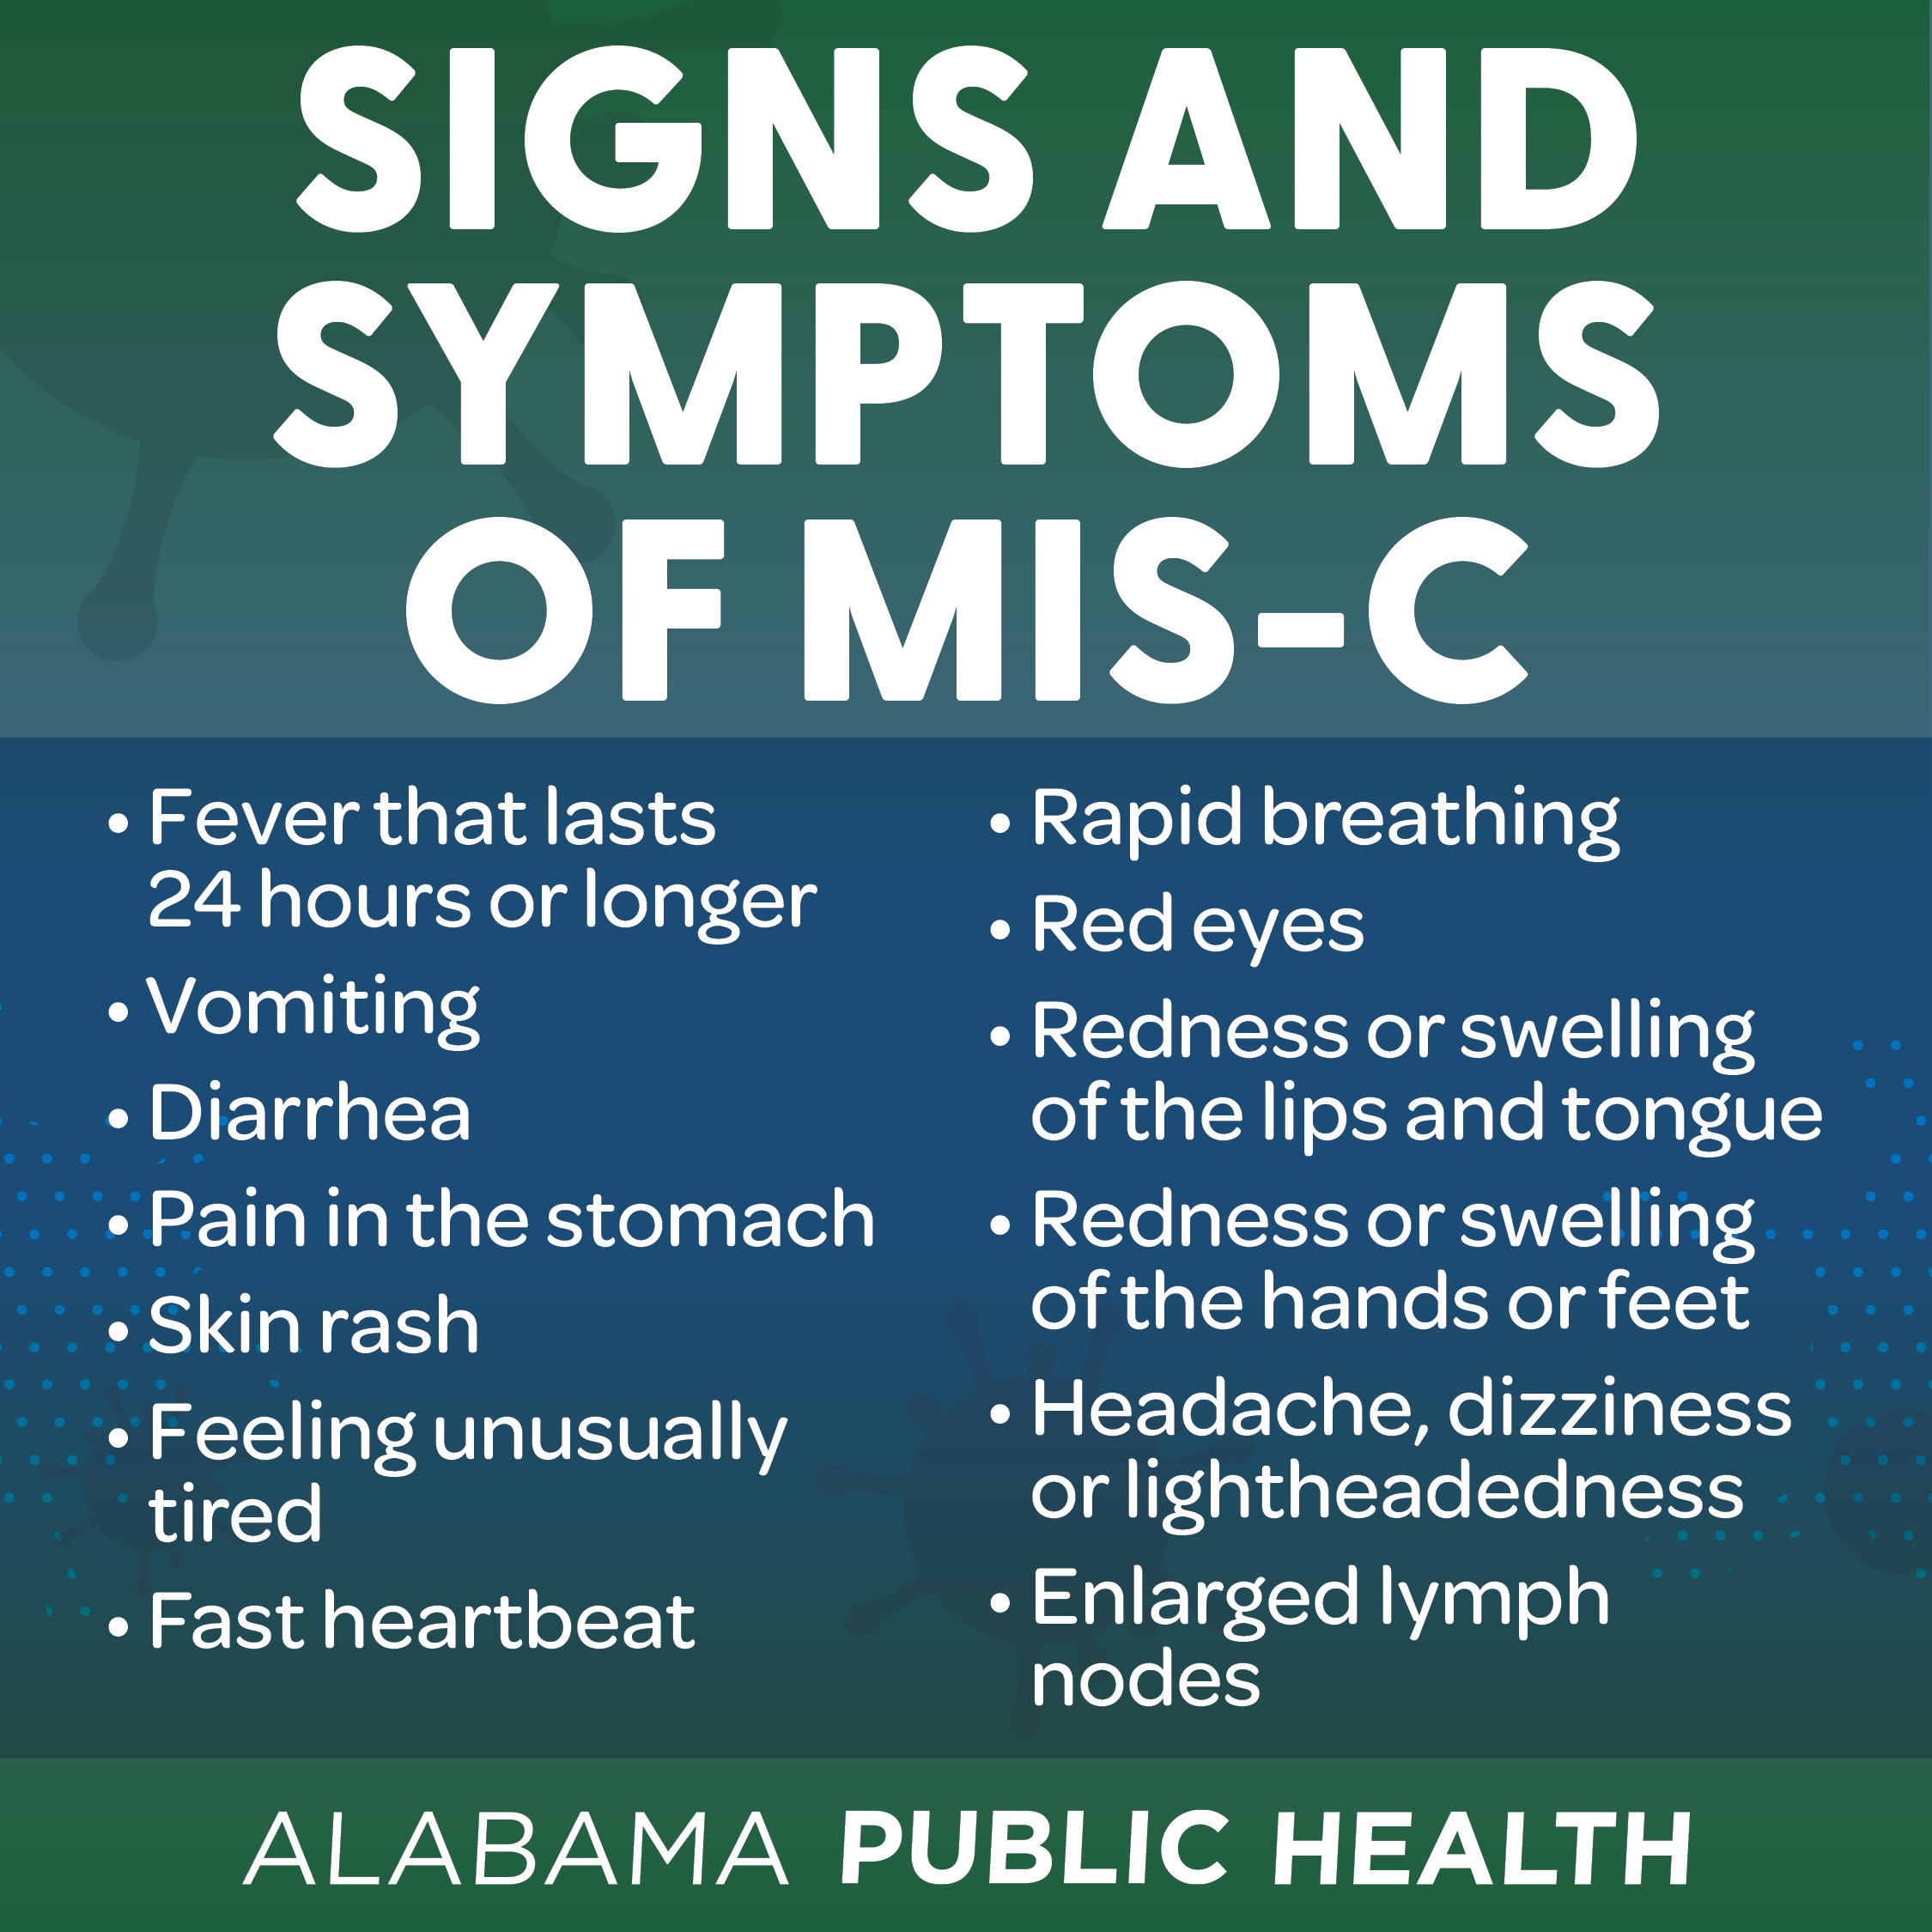 list of symptoms of MIS-C